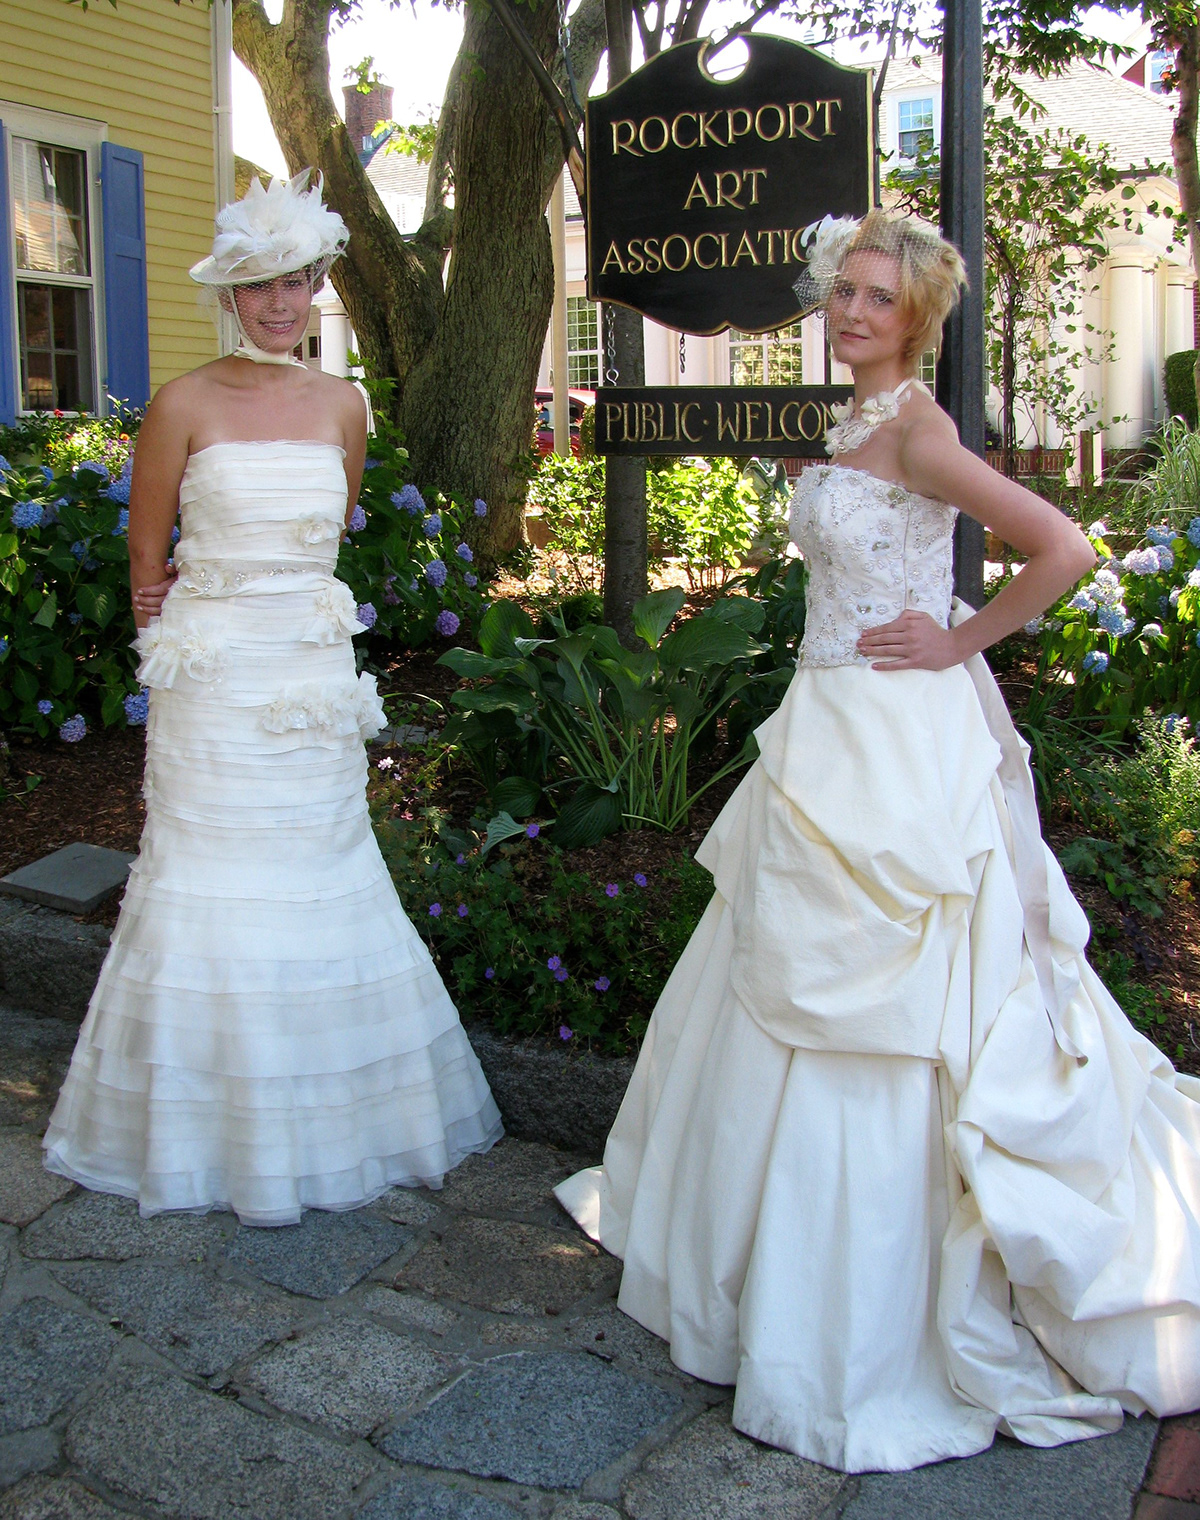 bridal wedding WeddingGowns BridalAccessories Hats Birdcageveils eco ecochic couture custommade